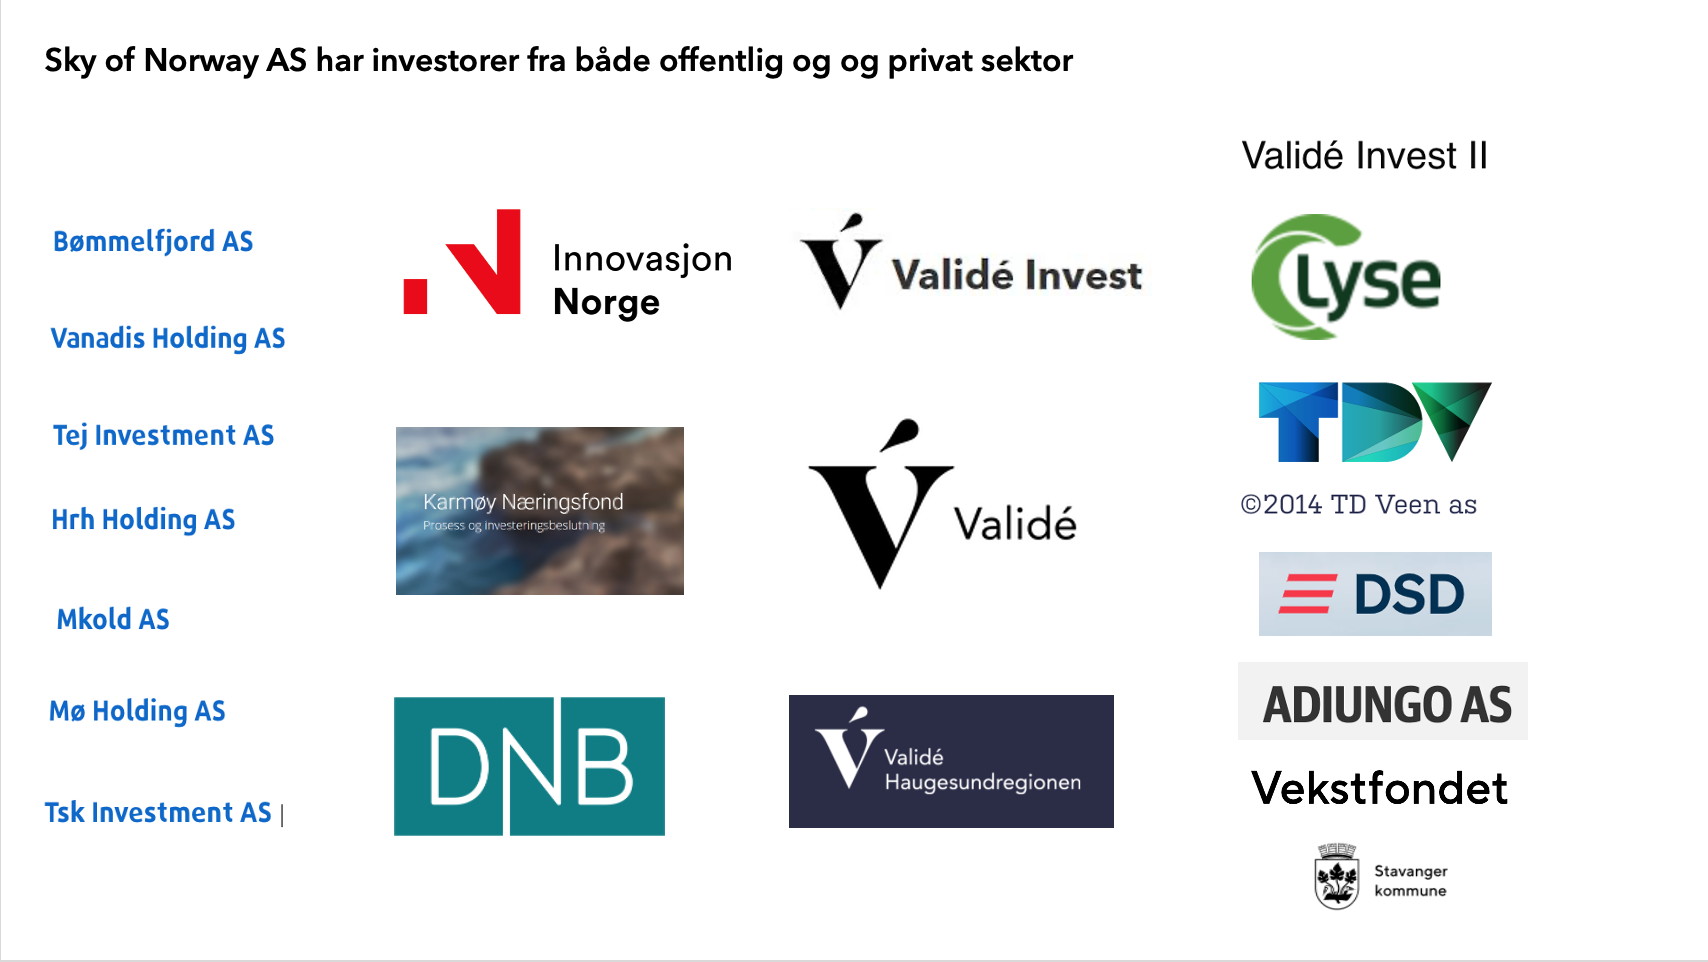 Sky of Norway. Investor 2